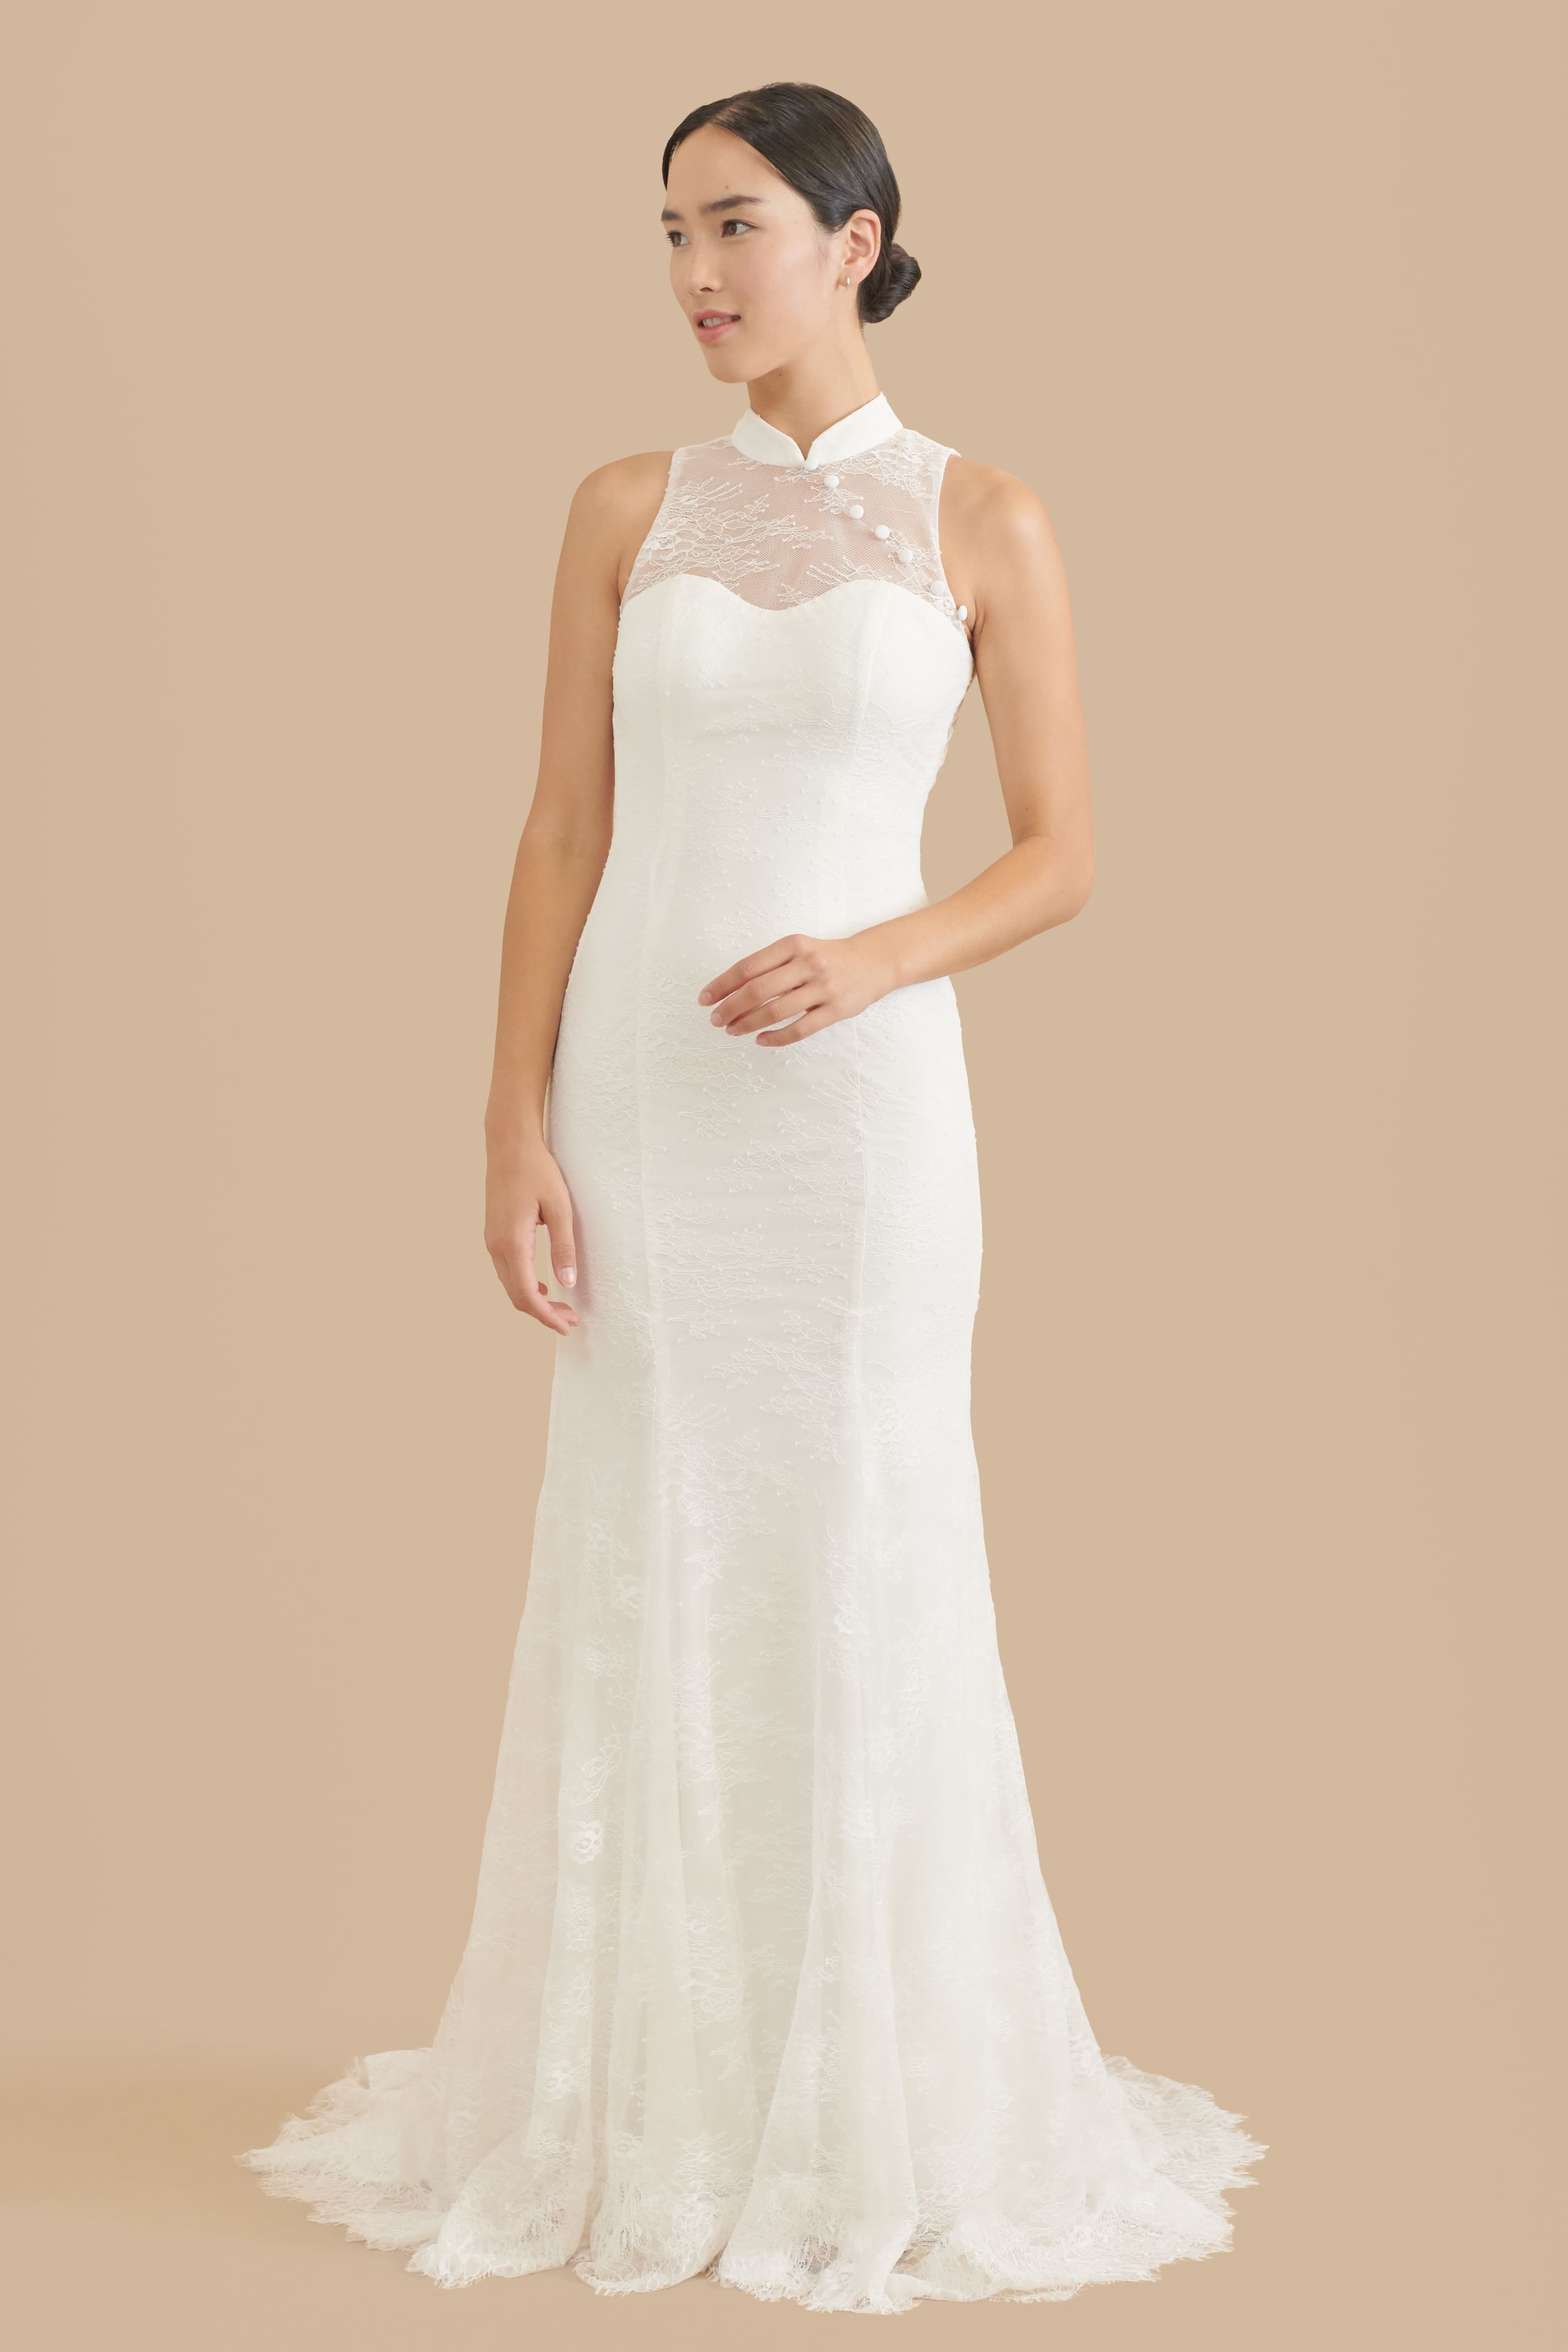 White Chinese Wedding Dress | Mabel ...